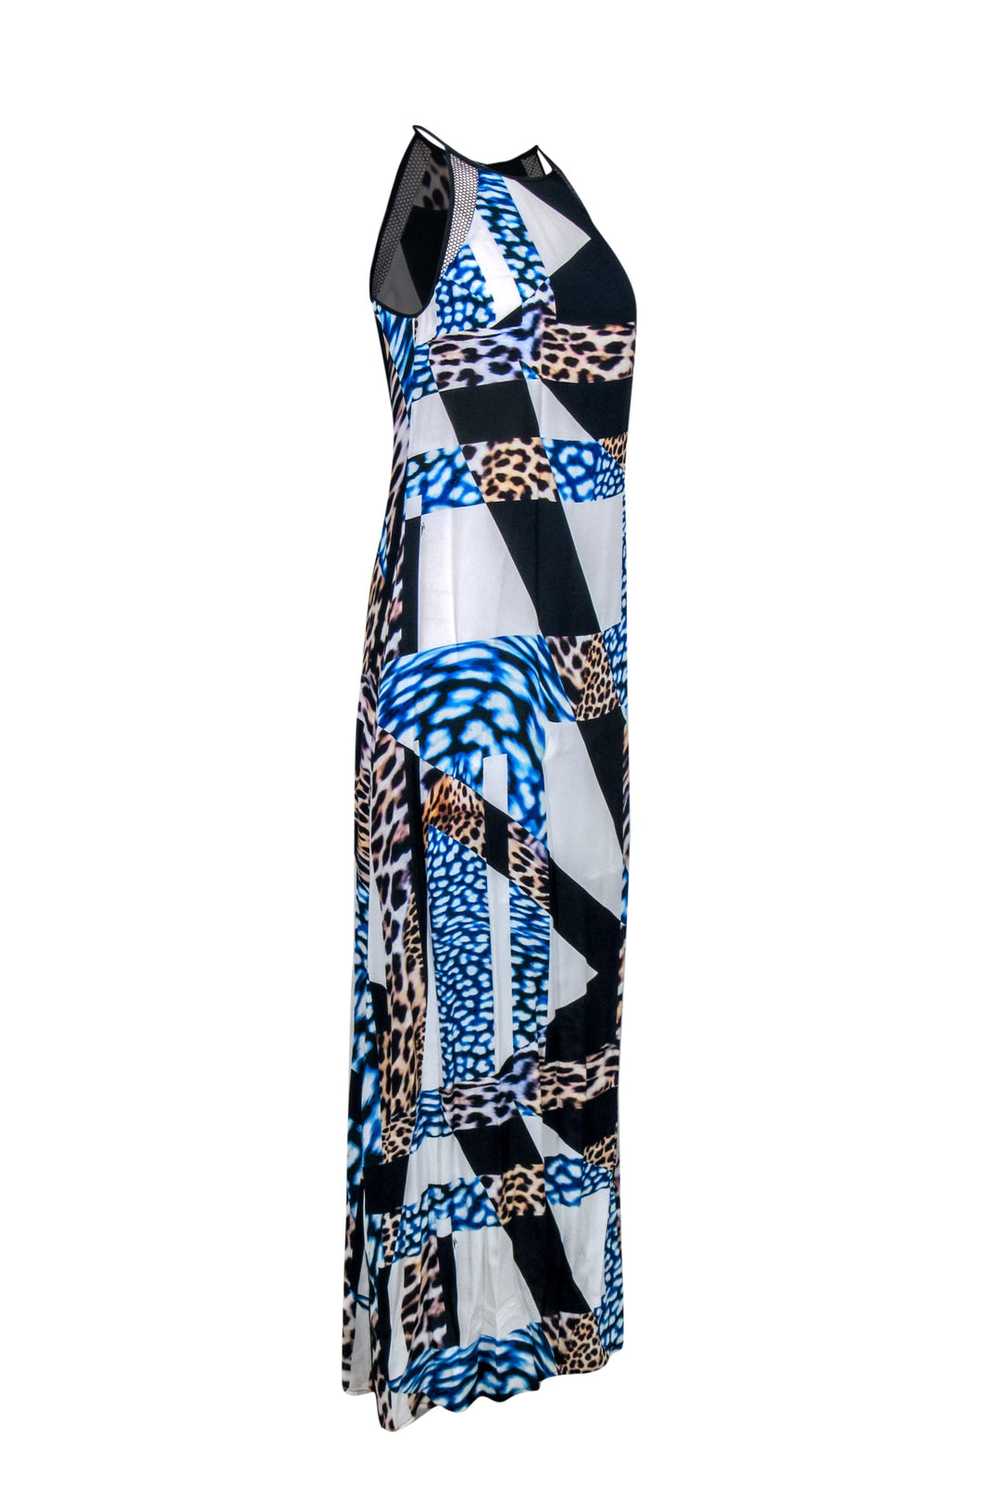 Trina Turk - Blue, Black & White Cheetah Geo Prin… - image 2